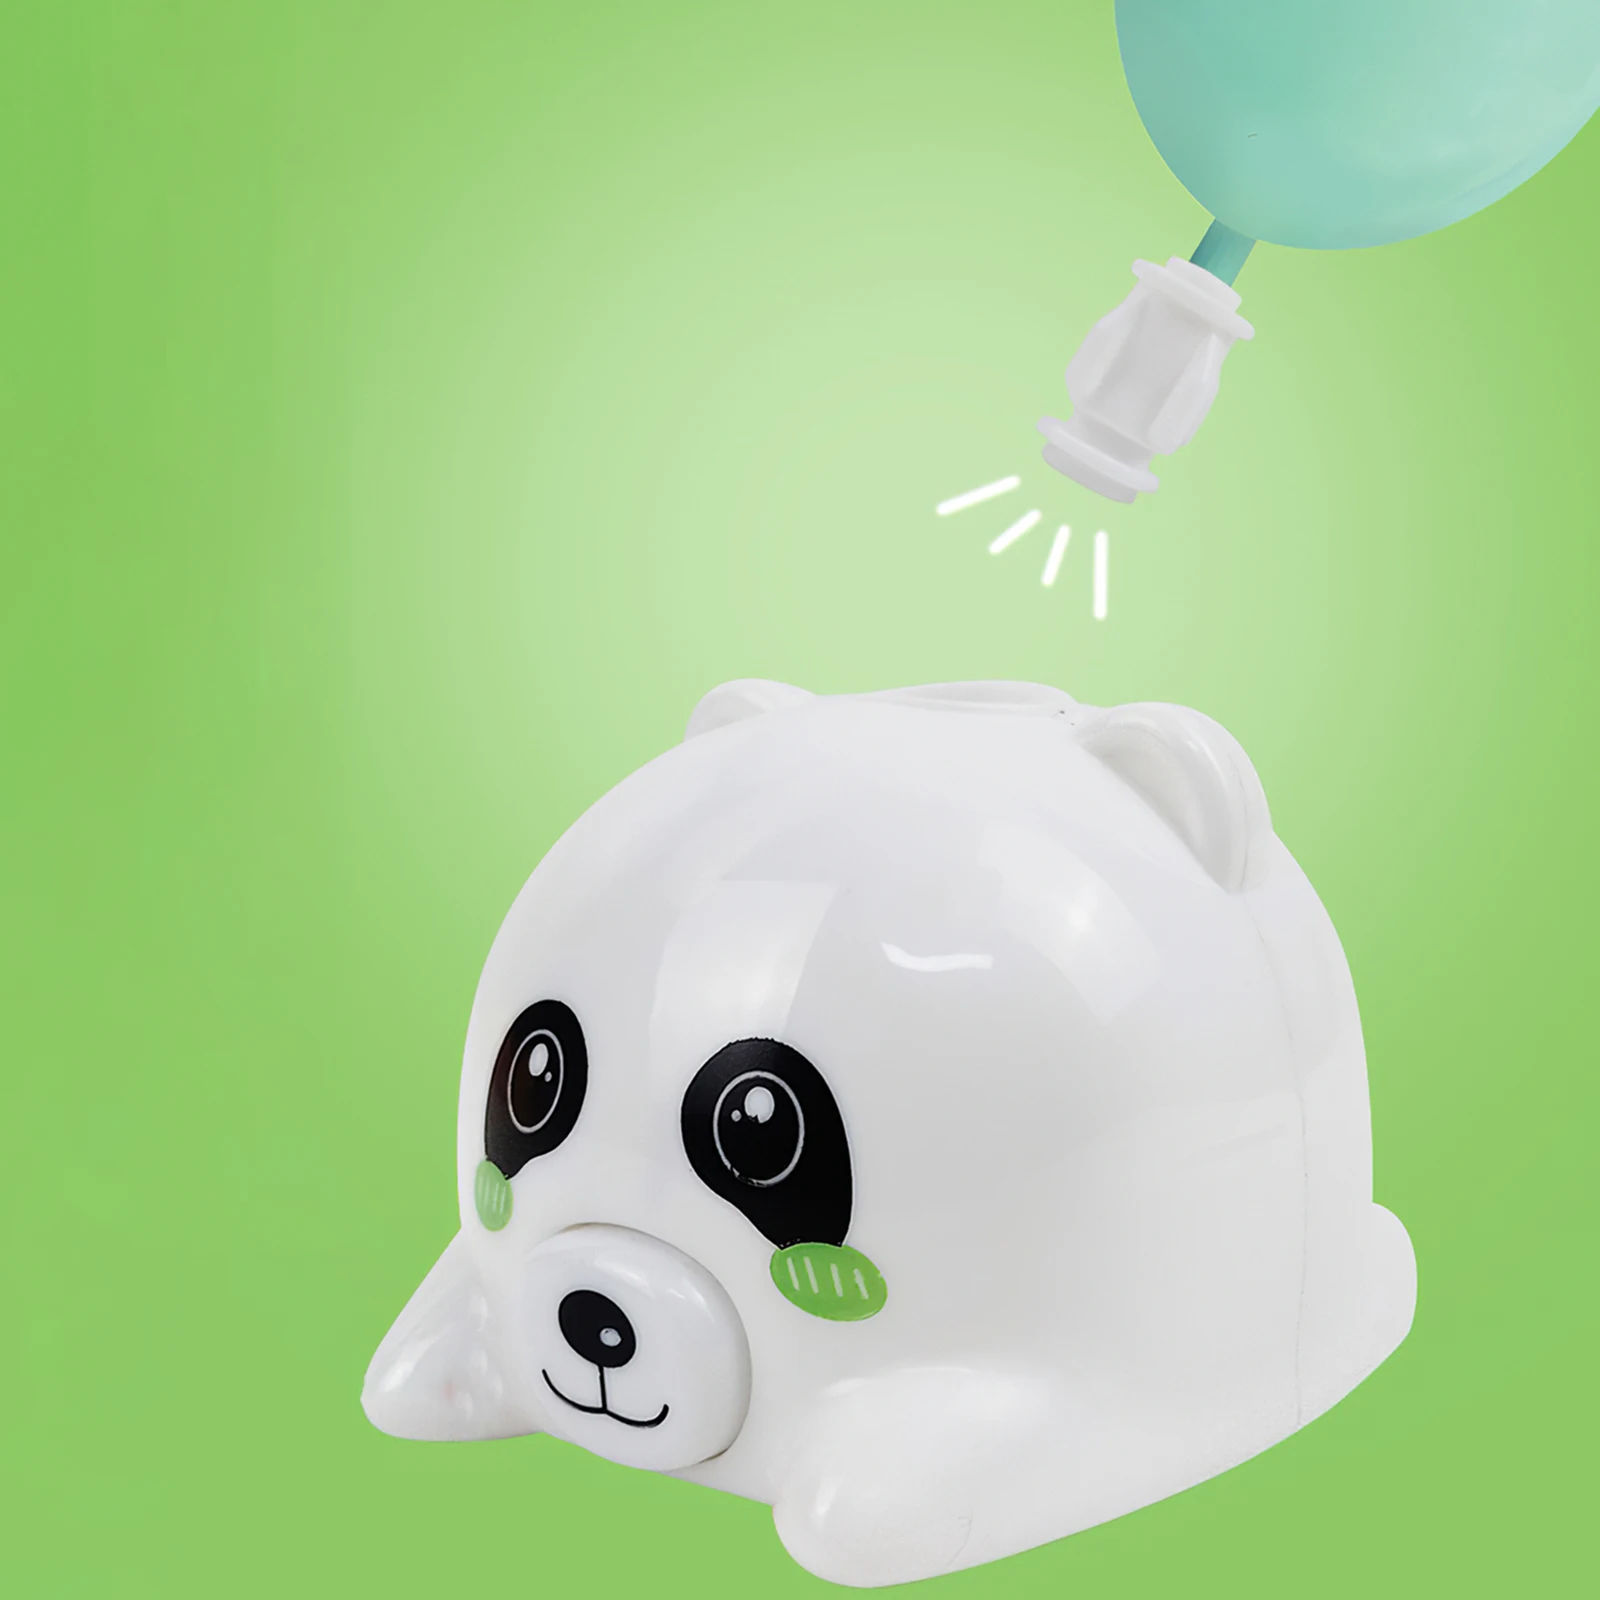 

Cute Panda Balloon Powered Car Toy Children Education Balloon Launcher Toy Kit Non-toxic Odorless Sturdy Fun Automobile Toys